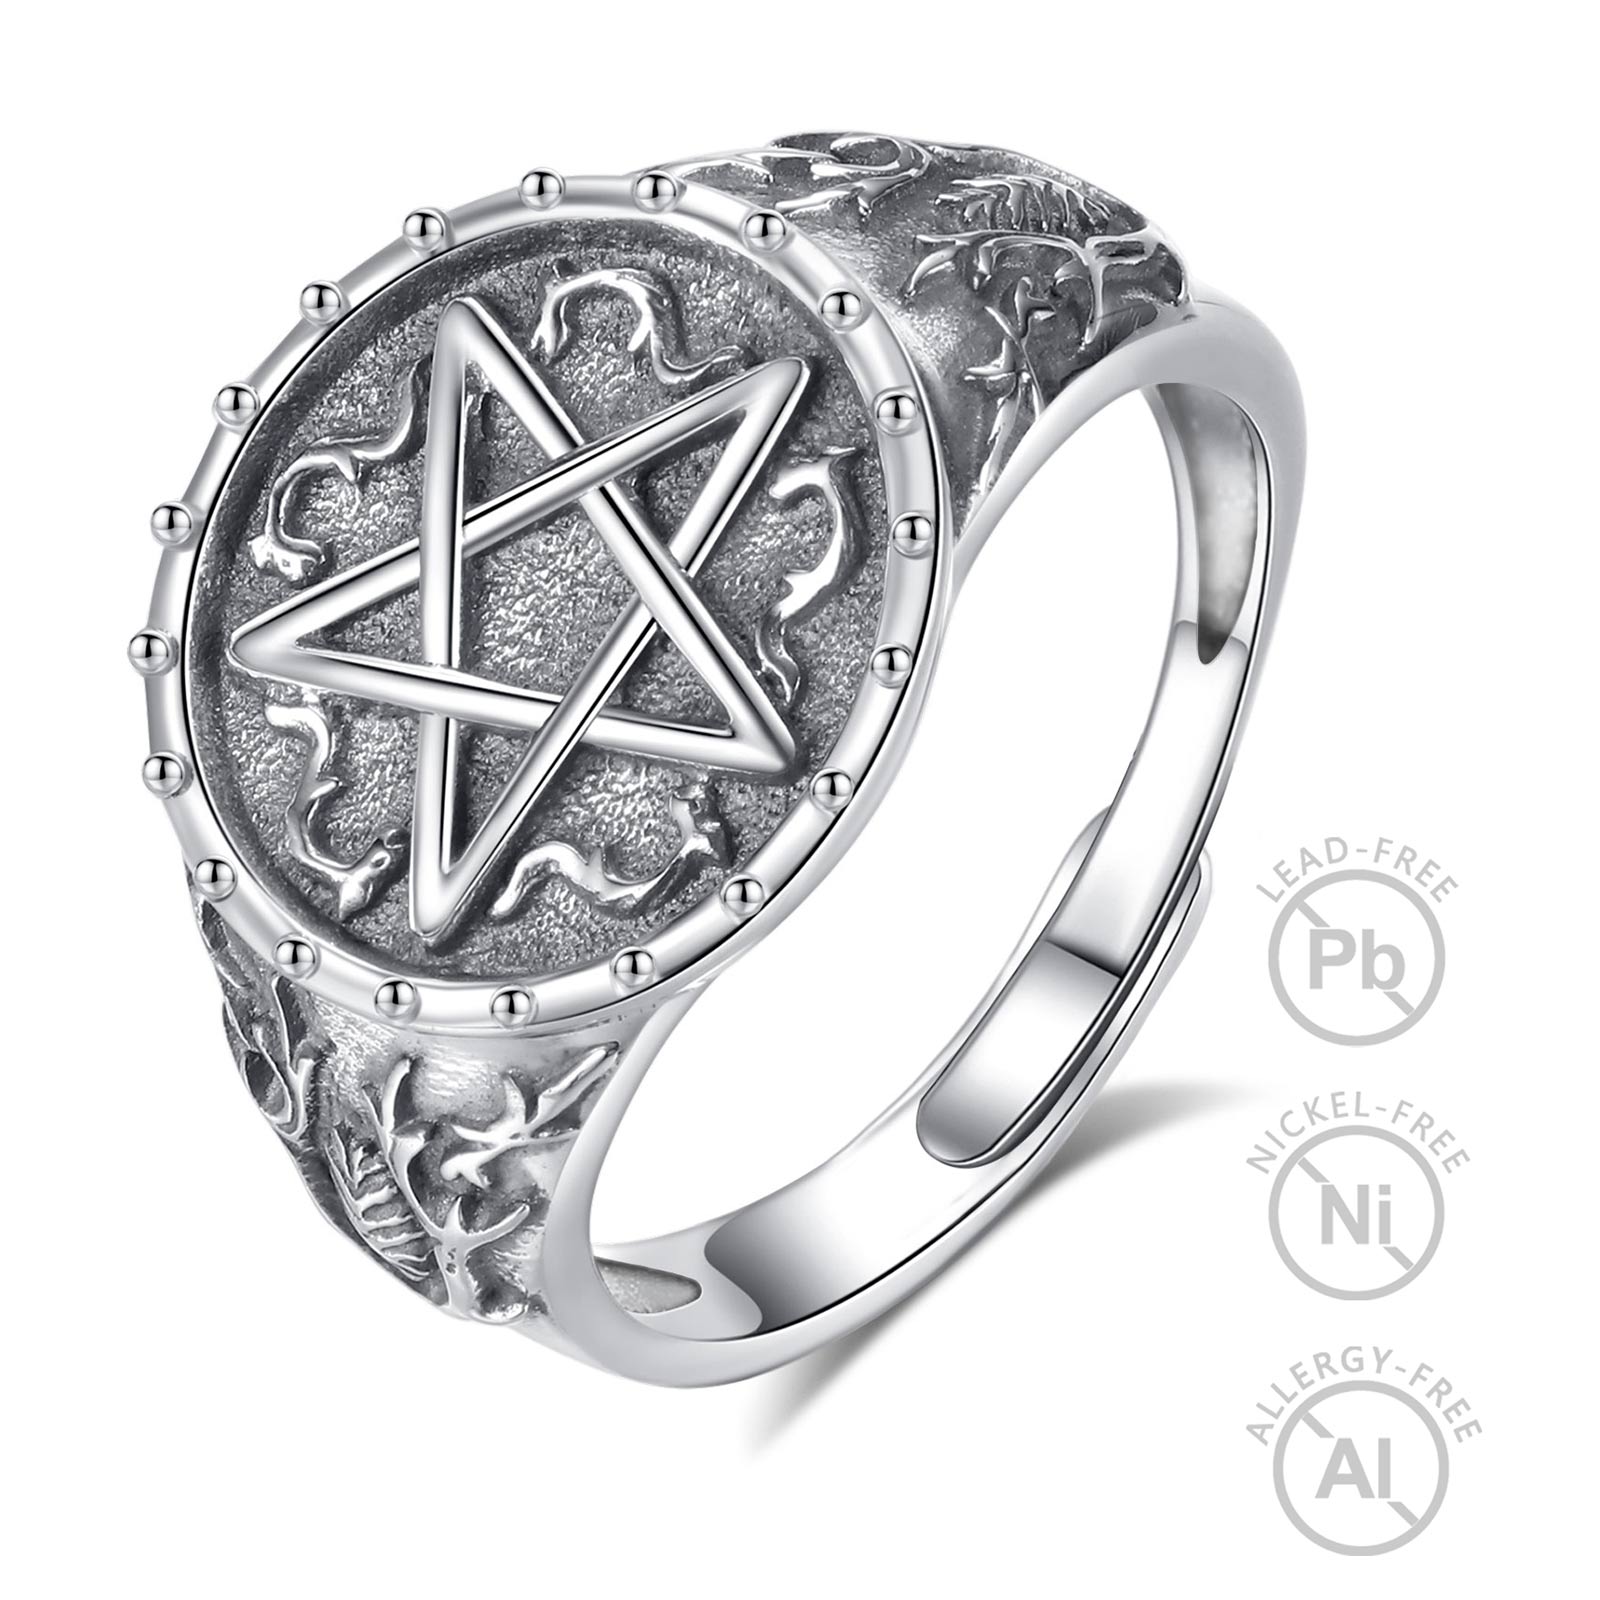 Merryshine Jewelry 925 Sterling Silver Tetragrammaton Pentagram Design Adjustable Open Wide Ring for Men